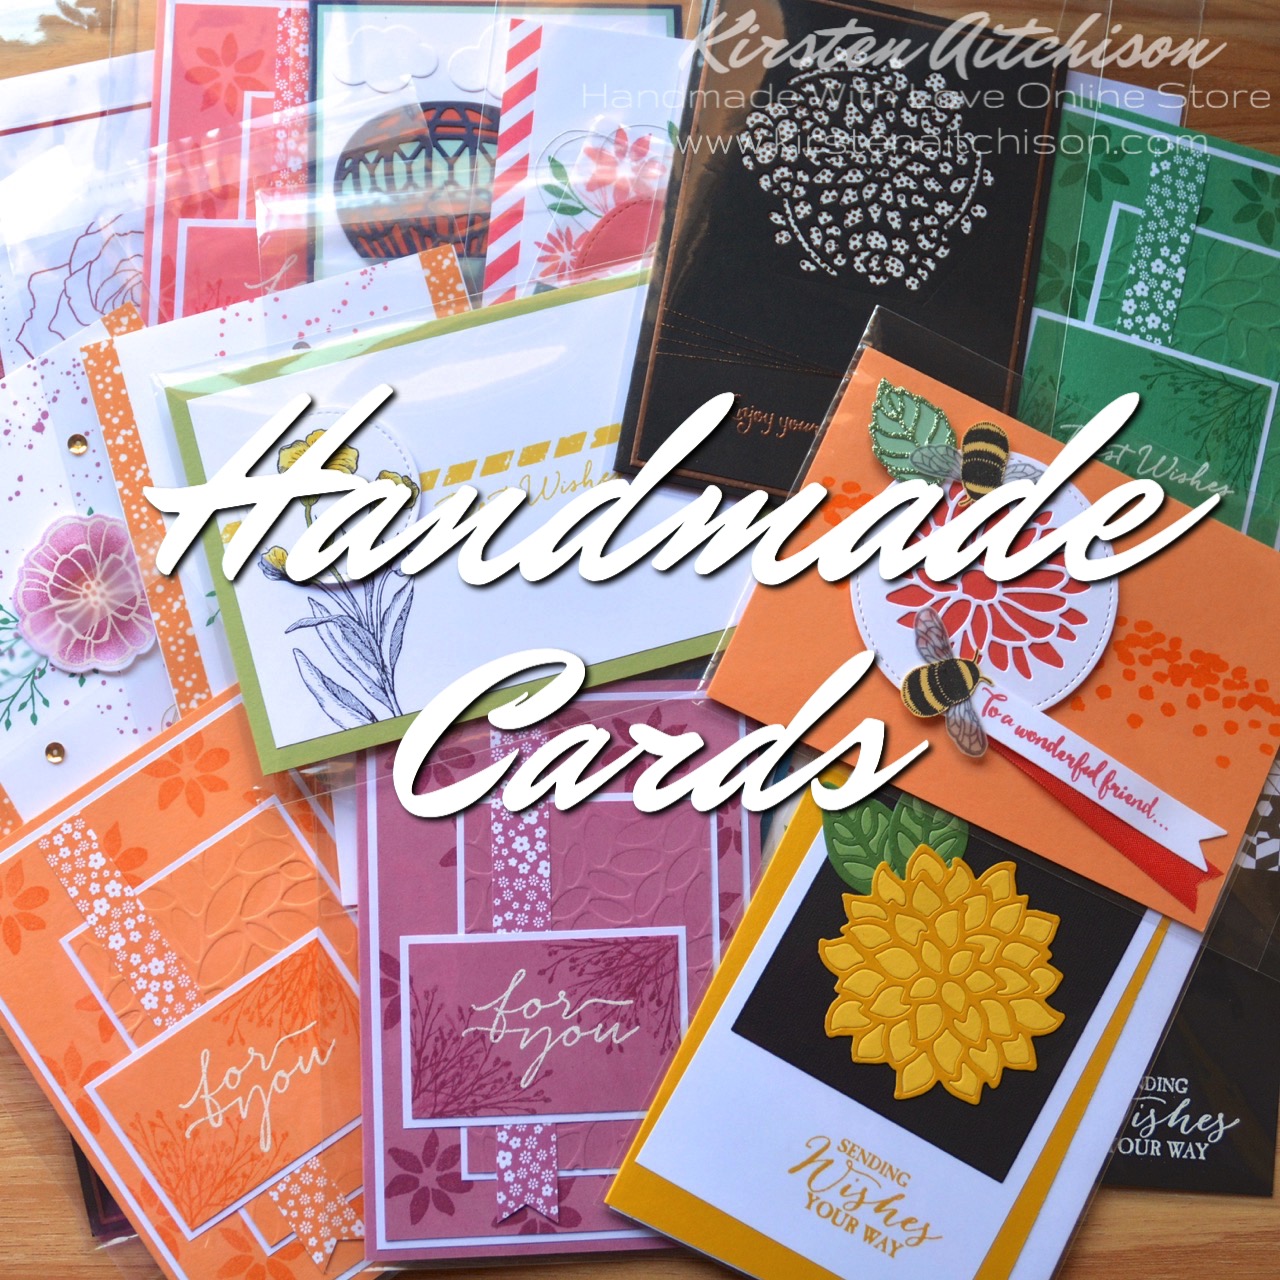 Handmade cards for sale